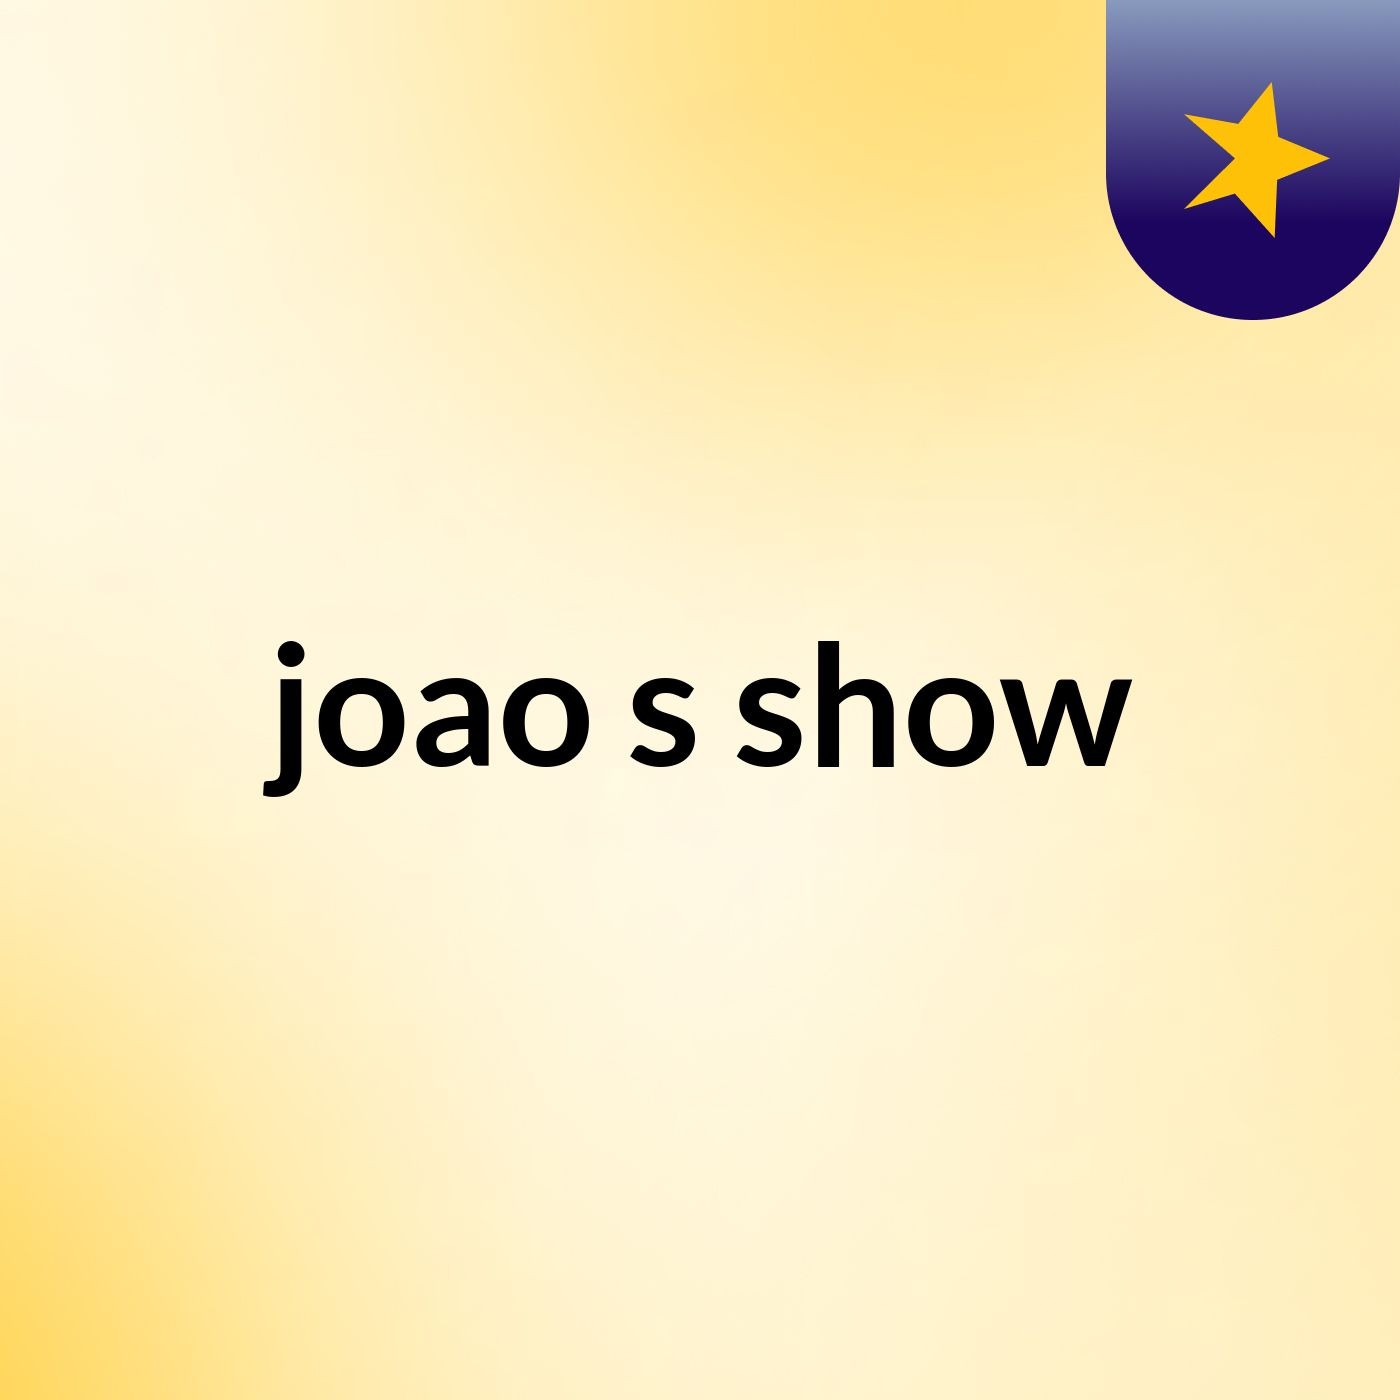 joao's show